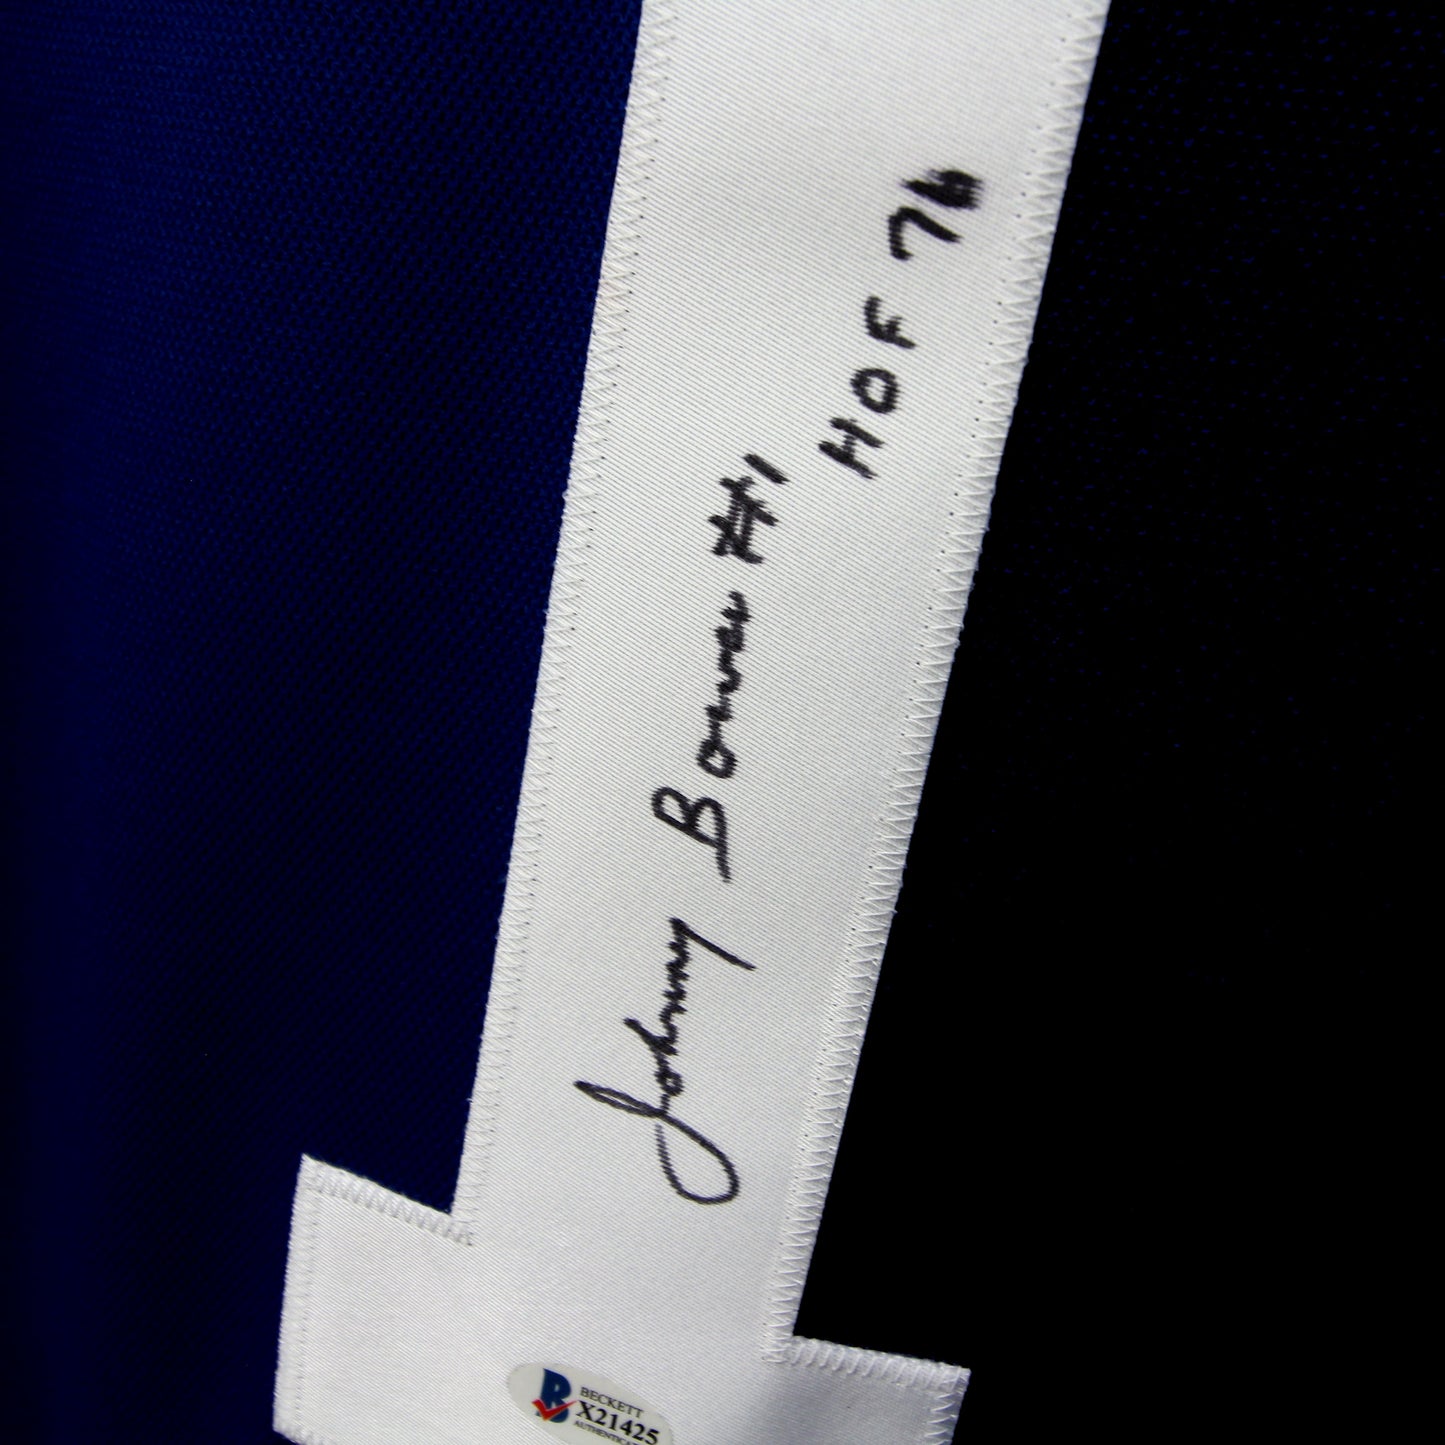 Johnny Bower - Maple Leafs - Autographed Jersey / Chandail autographié X21425